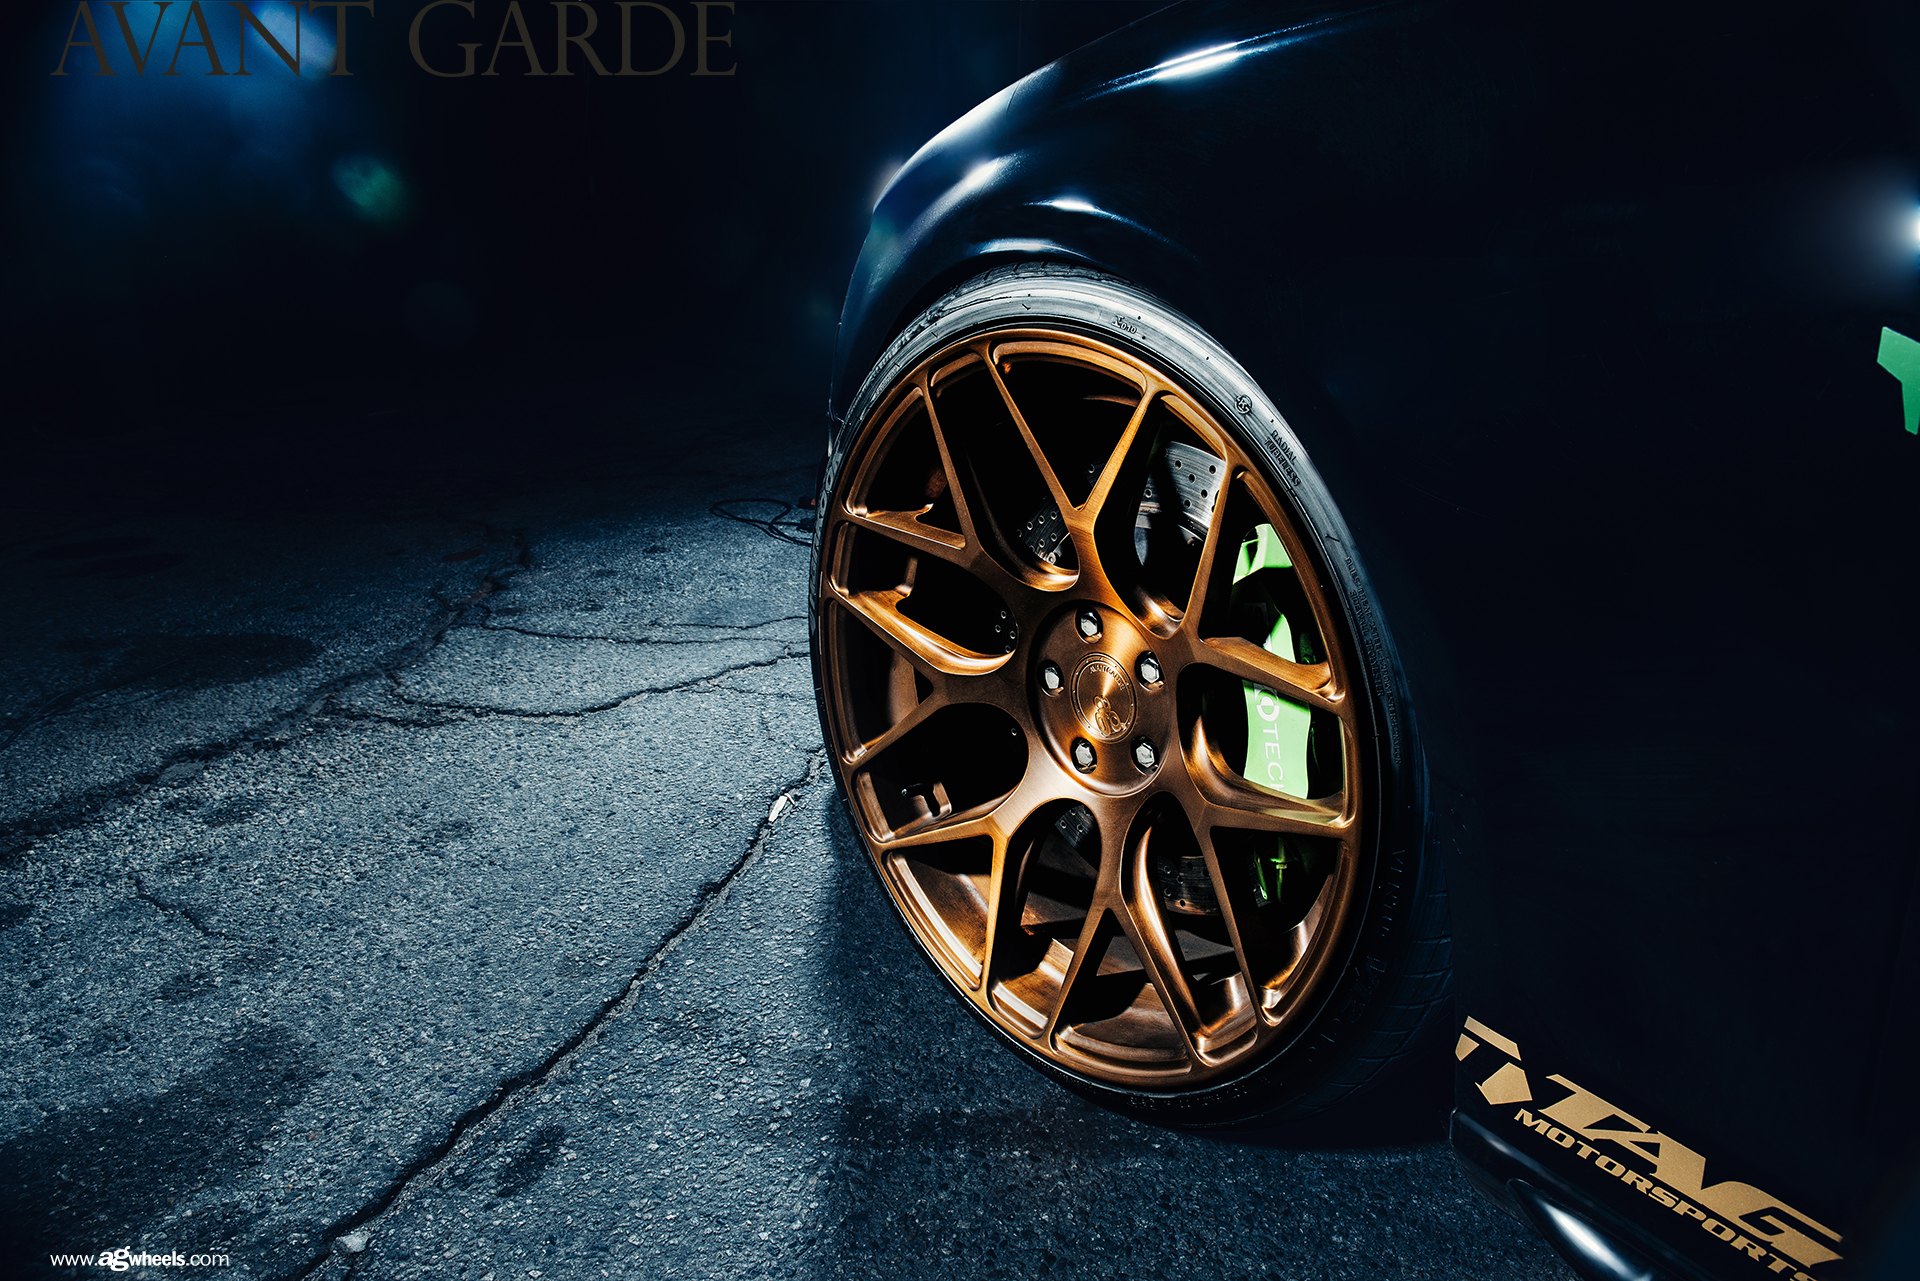 Black Audi S4 with Hankook Tires - Photo by Avant Garde Wheels